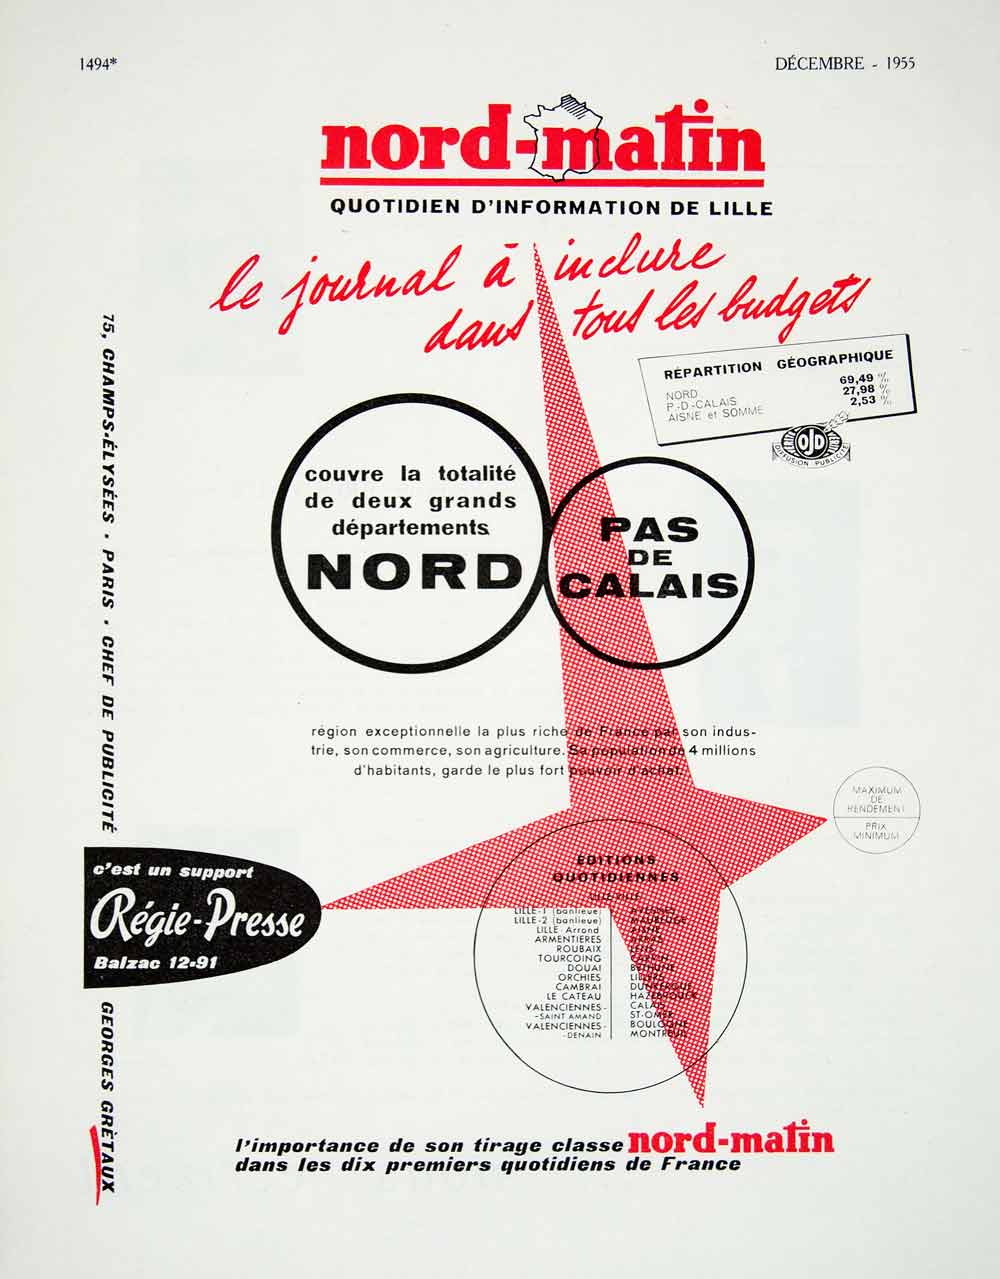 1955 Ad Nord-Matin Pas de Calais Regie-Presse Newspaper Circulation French VEN6